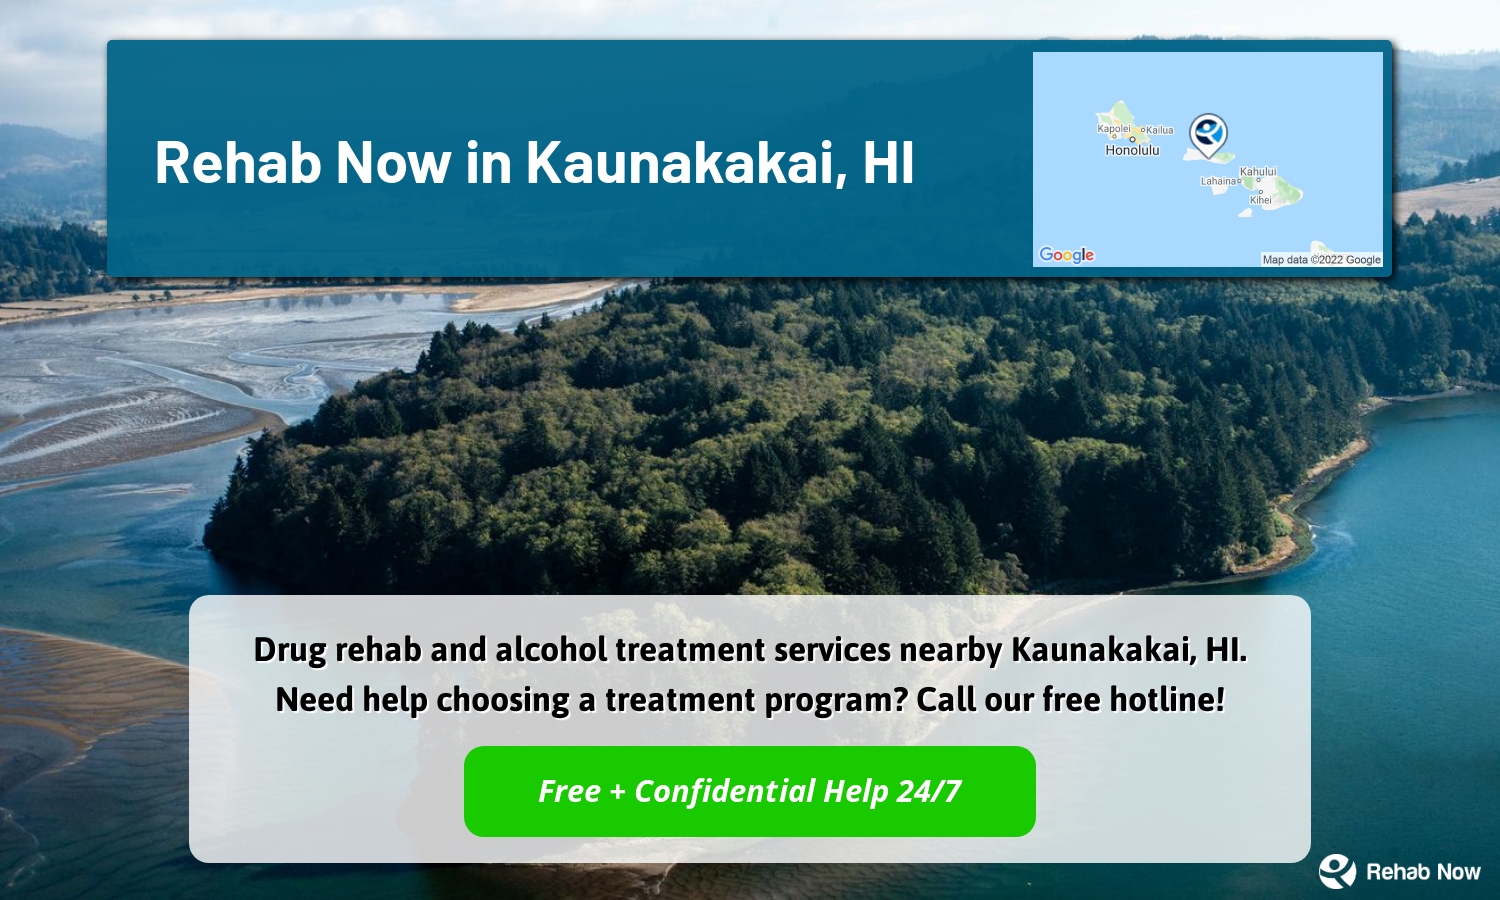 Drug rehab and alcohol treatment services nearby Kaunakakai, HI. Need help choosing a treatment program? Call our free hotline!